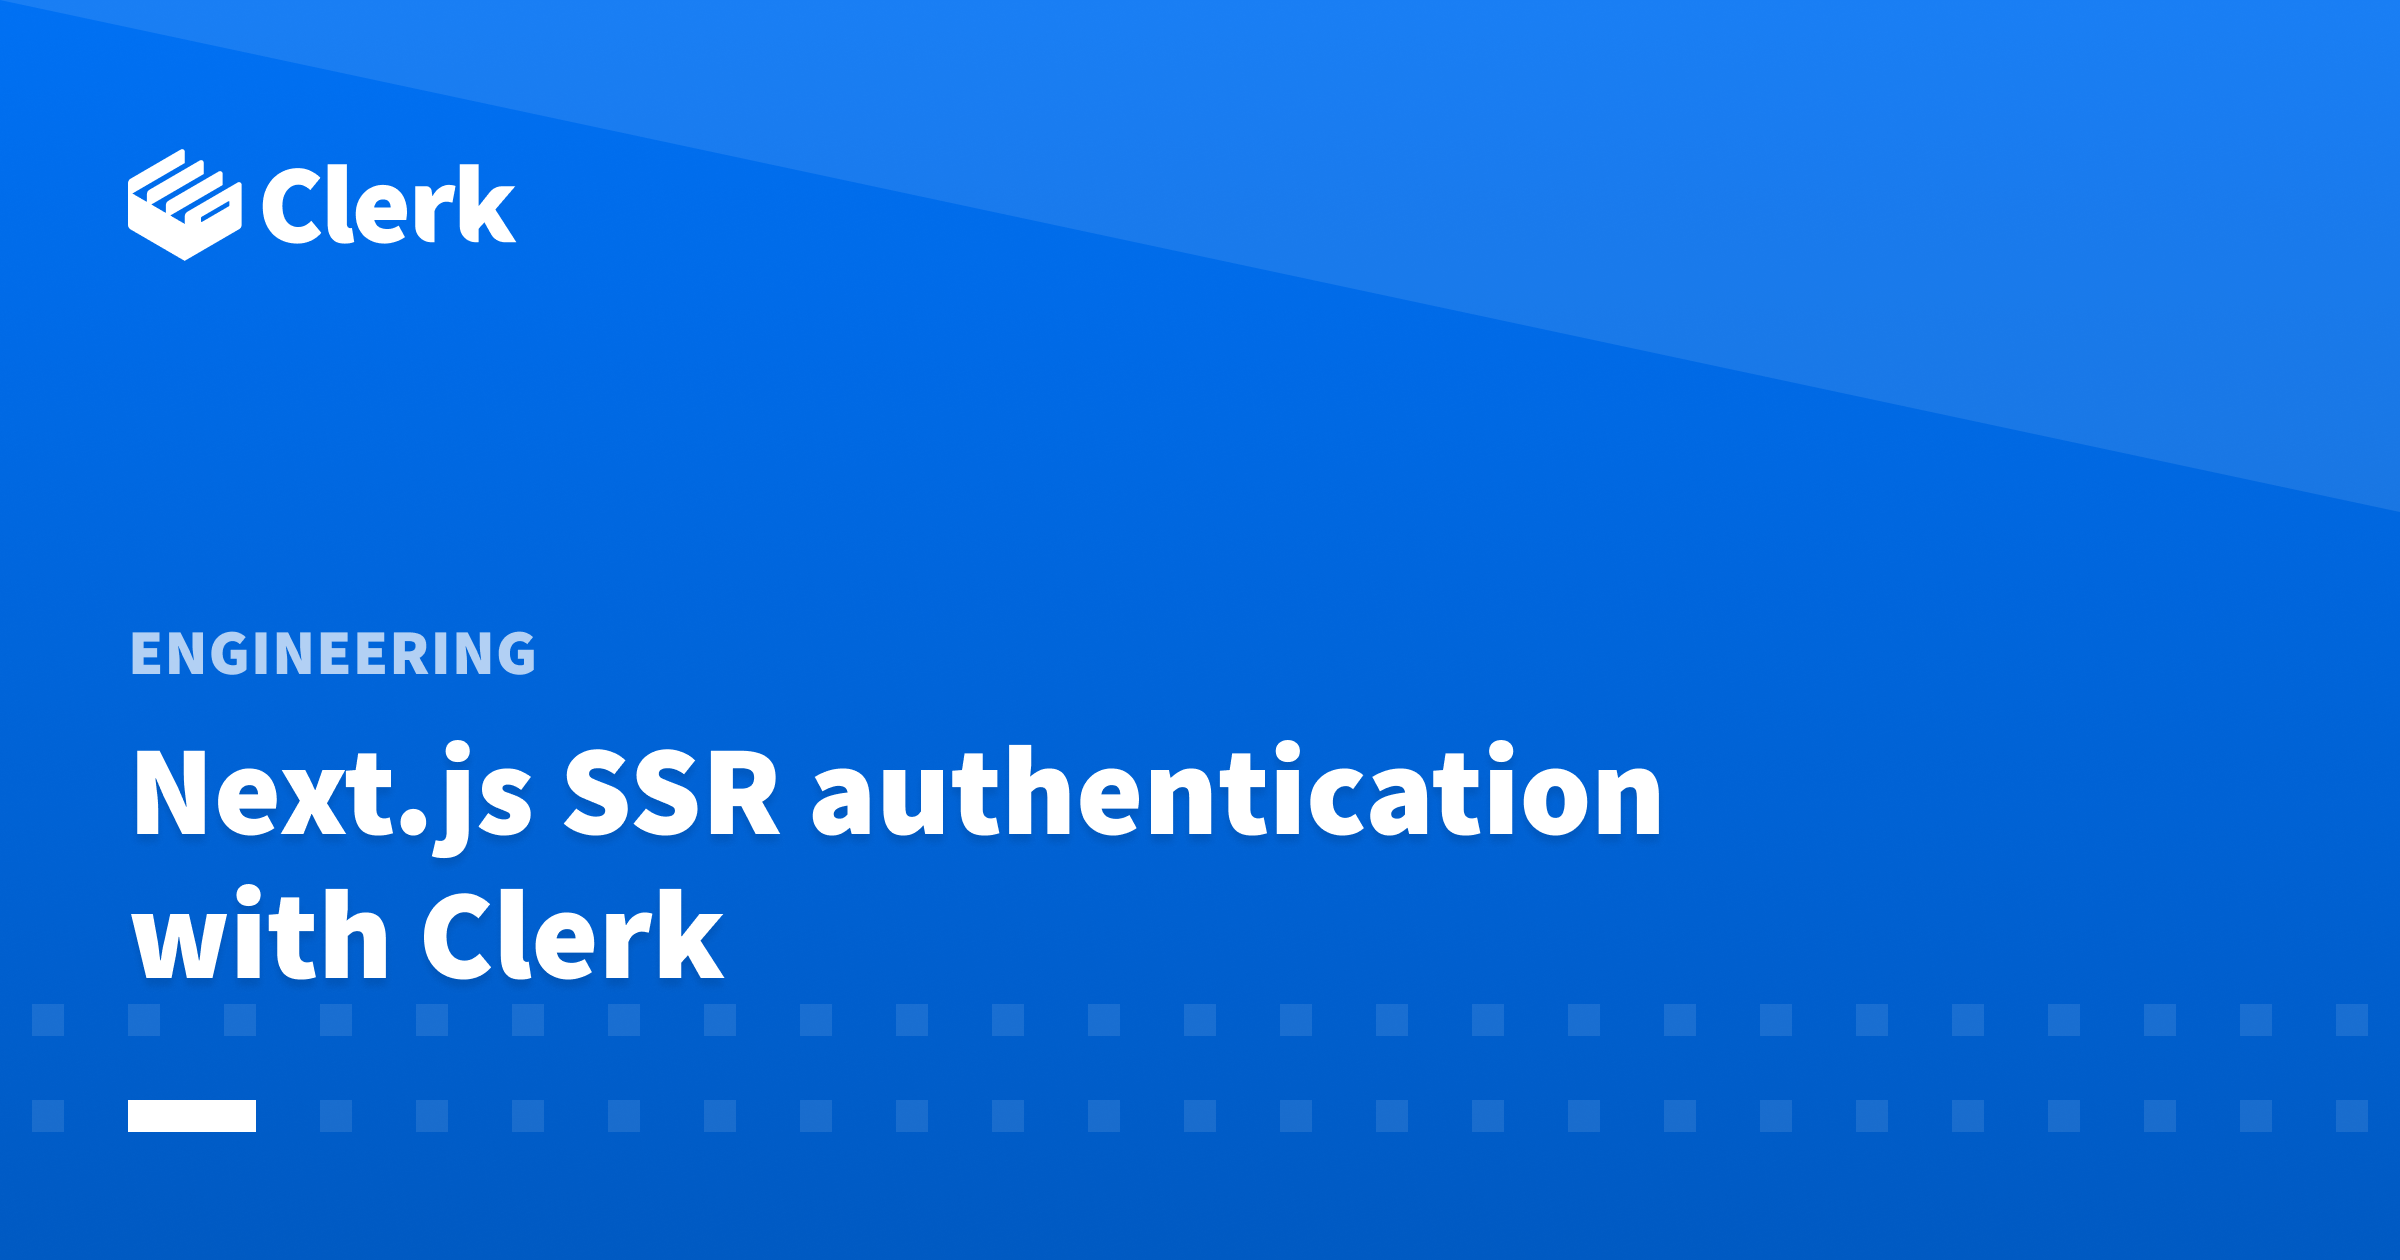 Next.js SSR authentication with Clerk